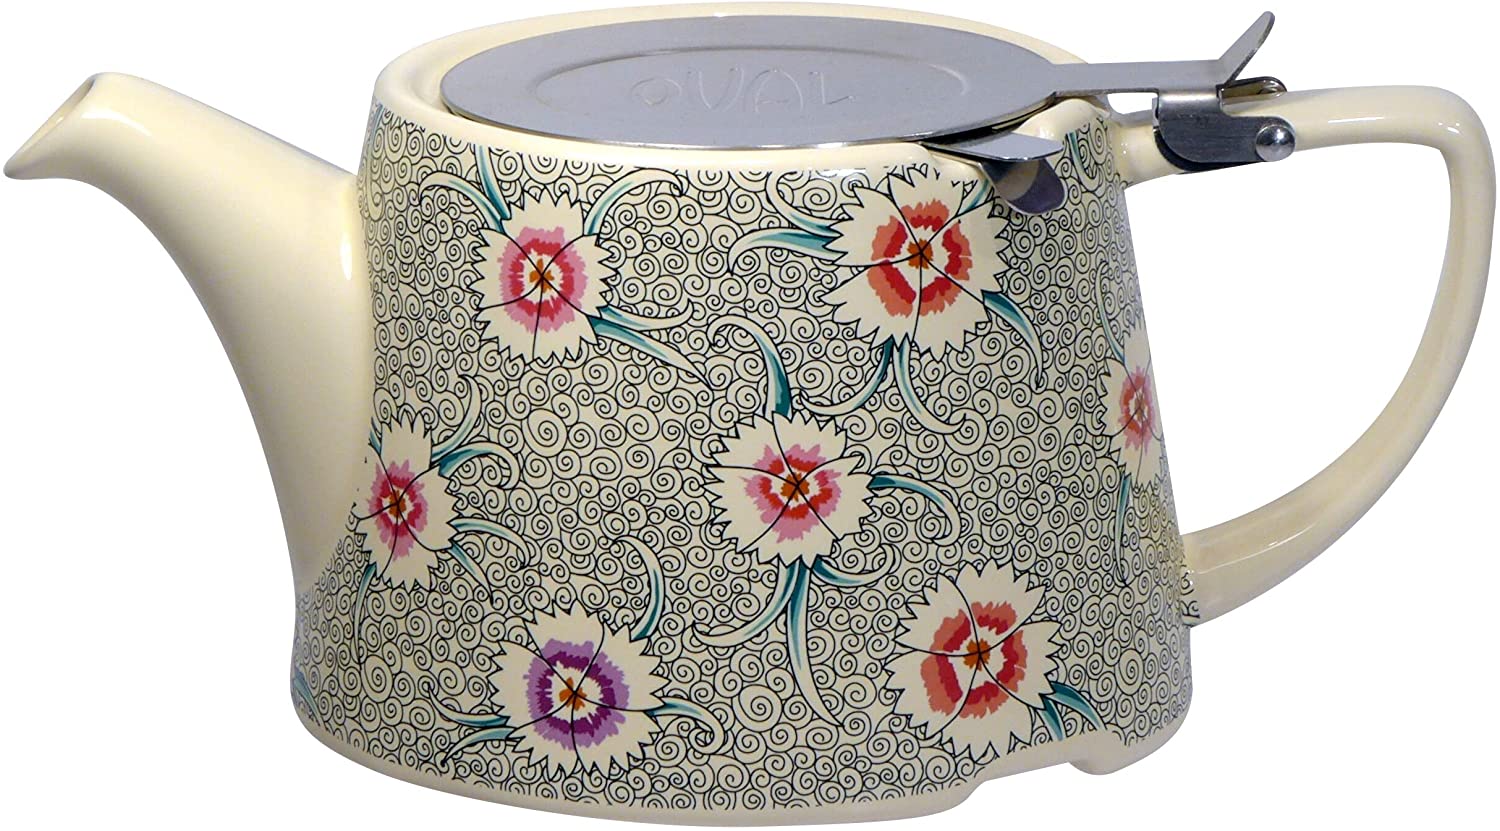 London Pottery Company Kaffe Fassett Oval Ceramic Egg Filter Teapot 800ml (28 Fl Oz) – Dianthus